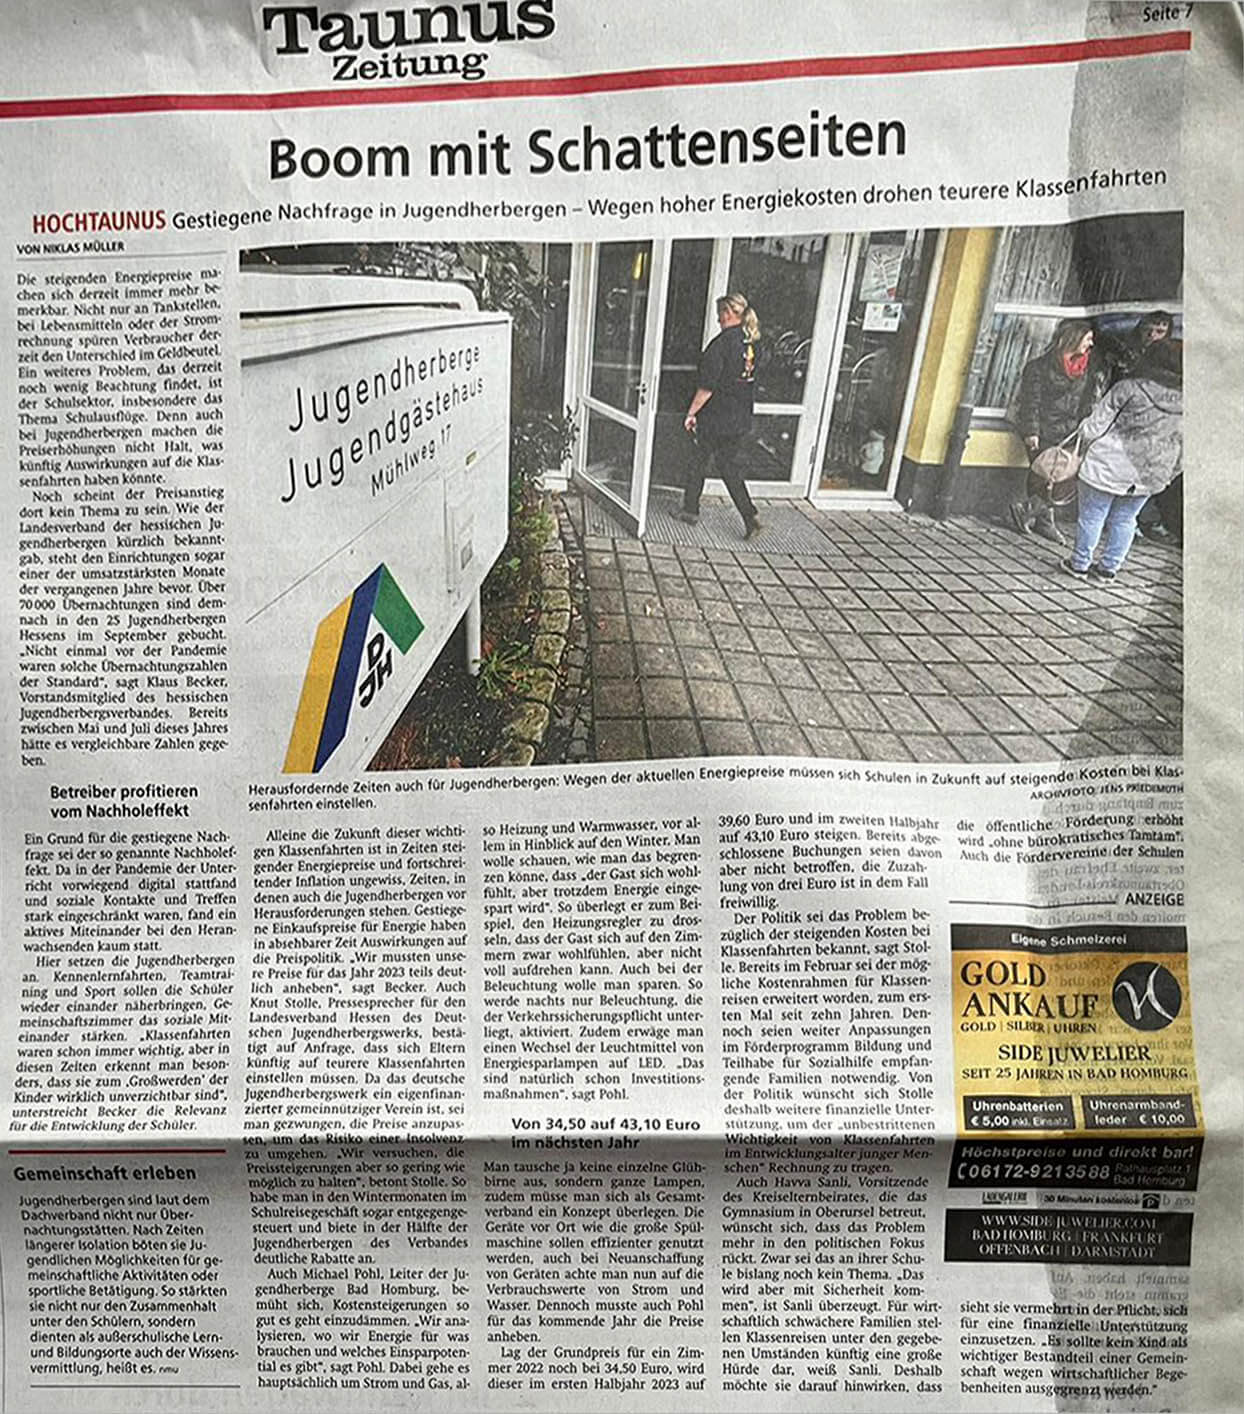 Wegen hoher Energiekosten drohen teuere Klassenfahrten- Zeitungsartikel Taunus Zeitung